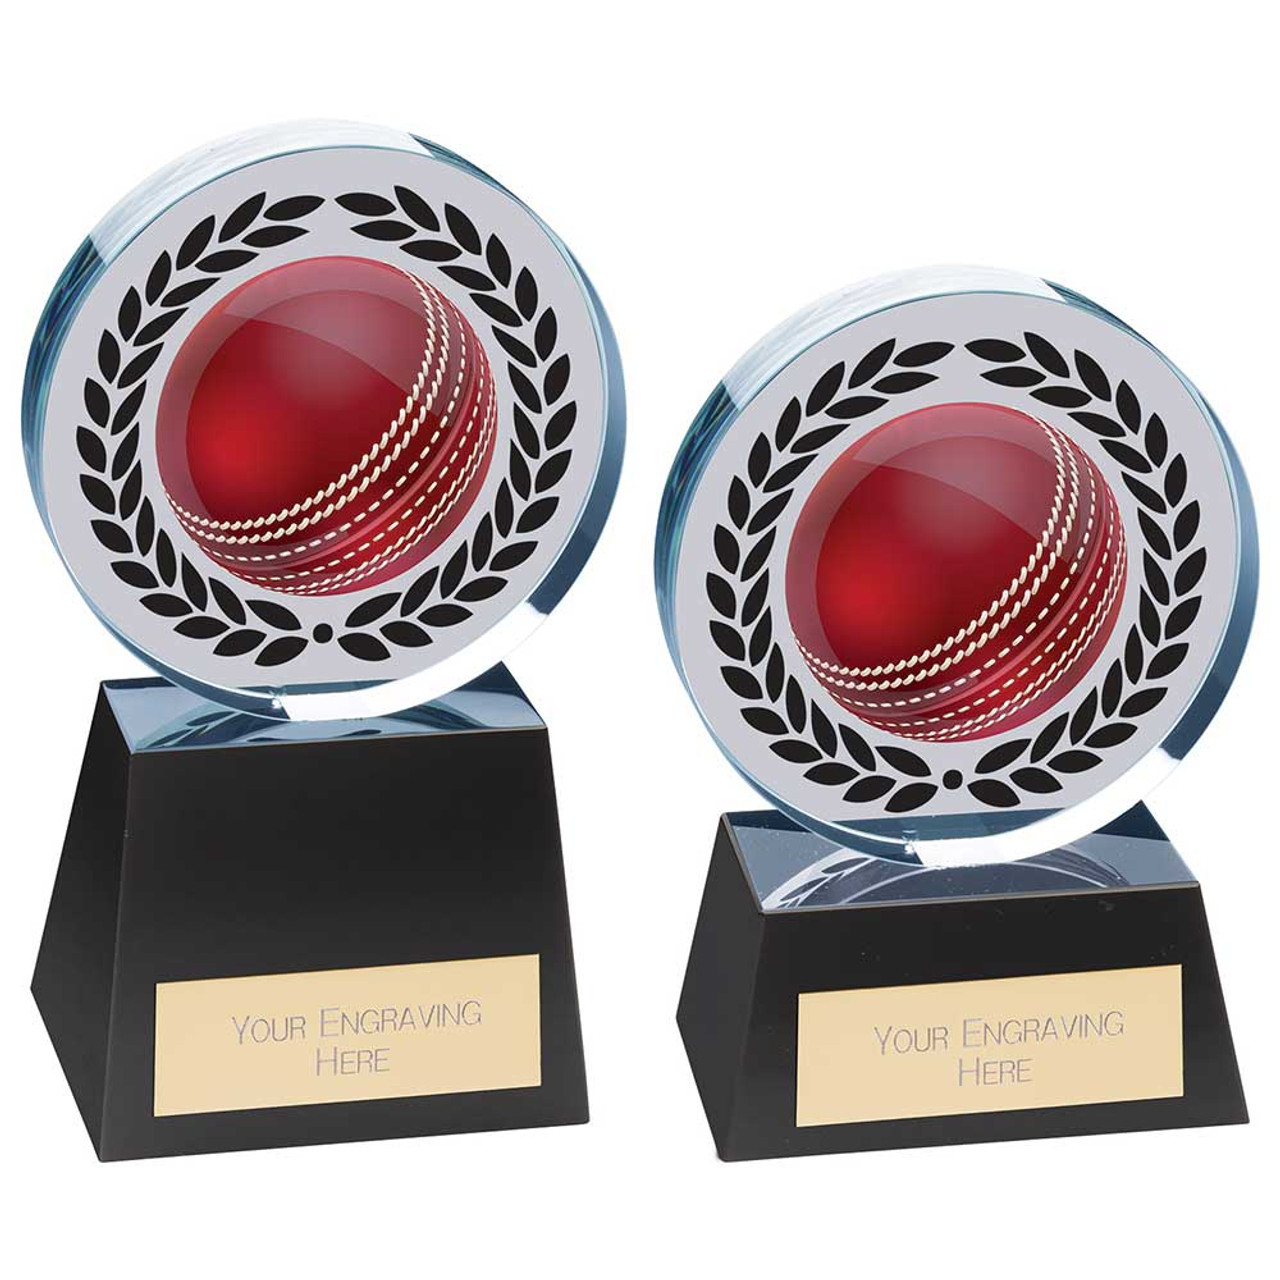 Emperor Cricket Glass Award in 2 sizes